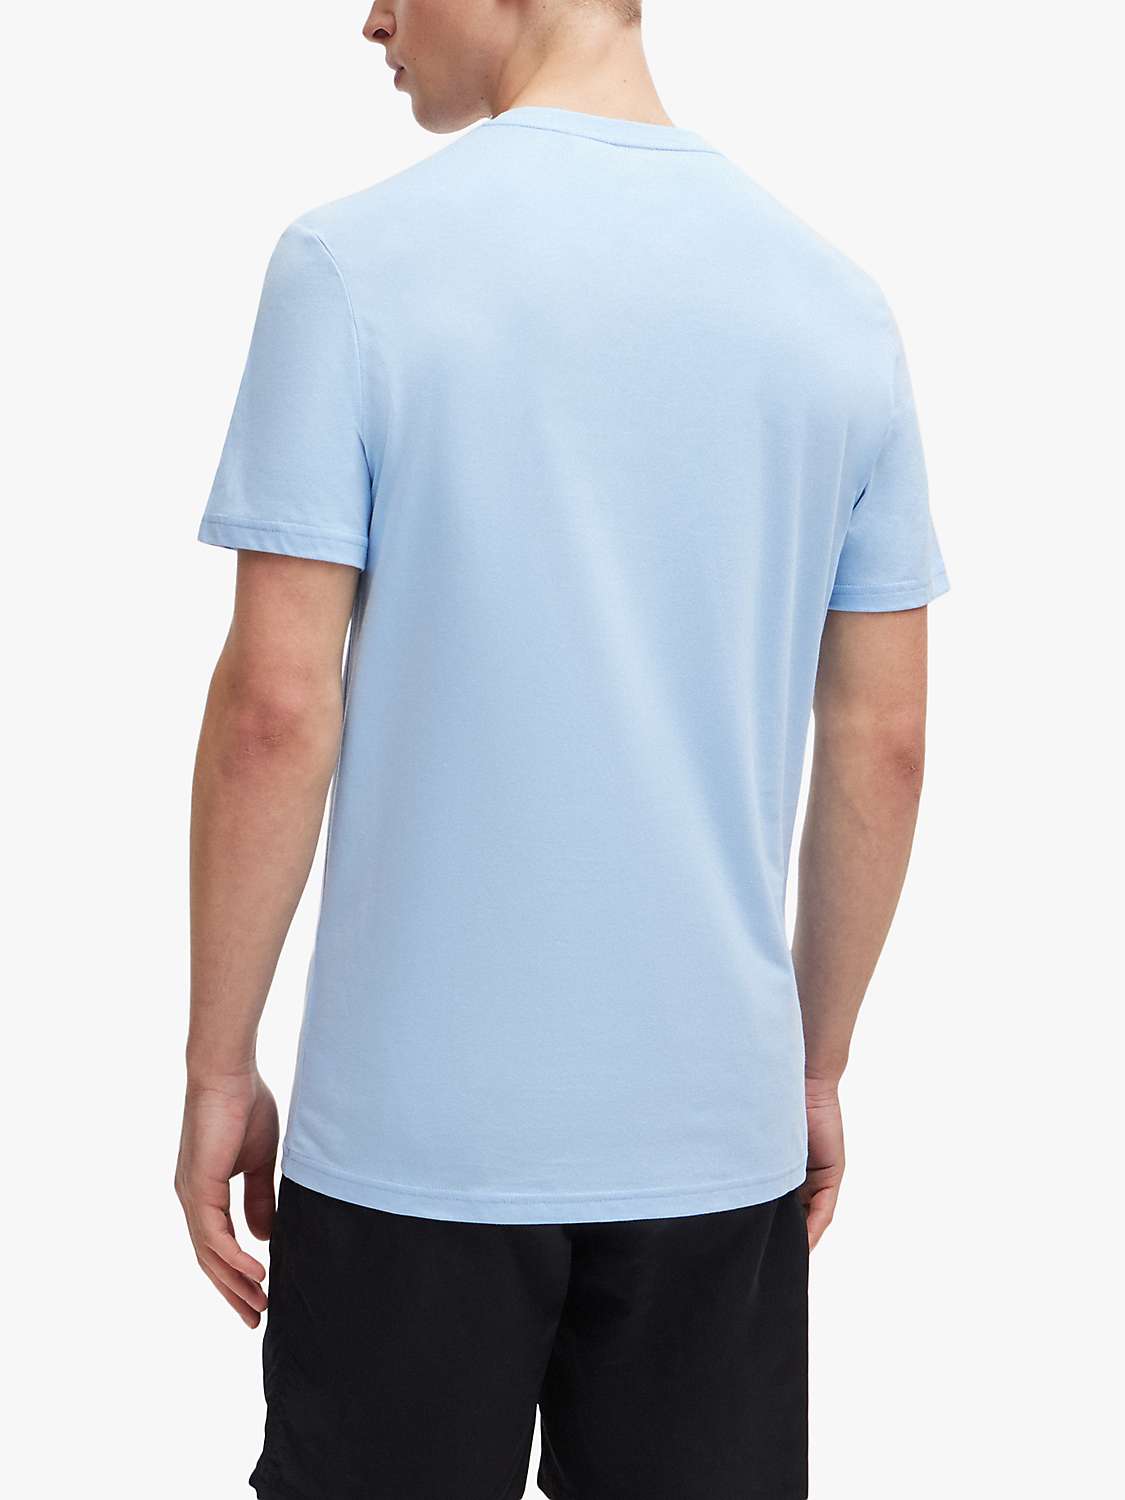 Buy BOSS Regular Fit T-Shirt, Pastel Blue Online at johnlewis.com